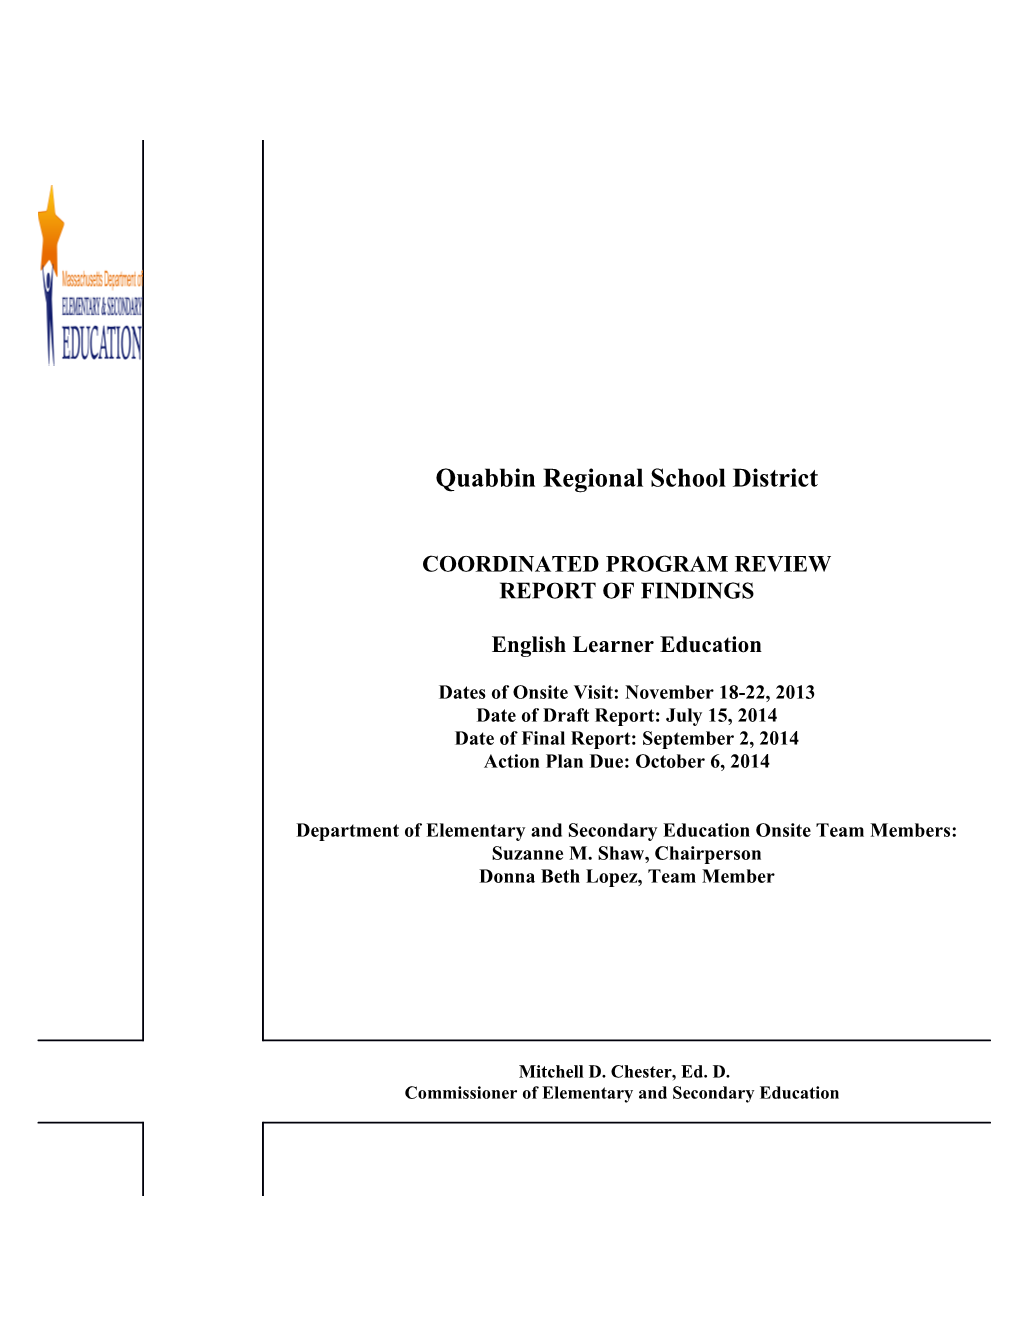 Quabbin Regional School District CPR Final Report 2013-14